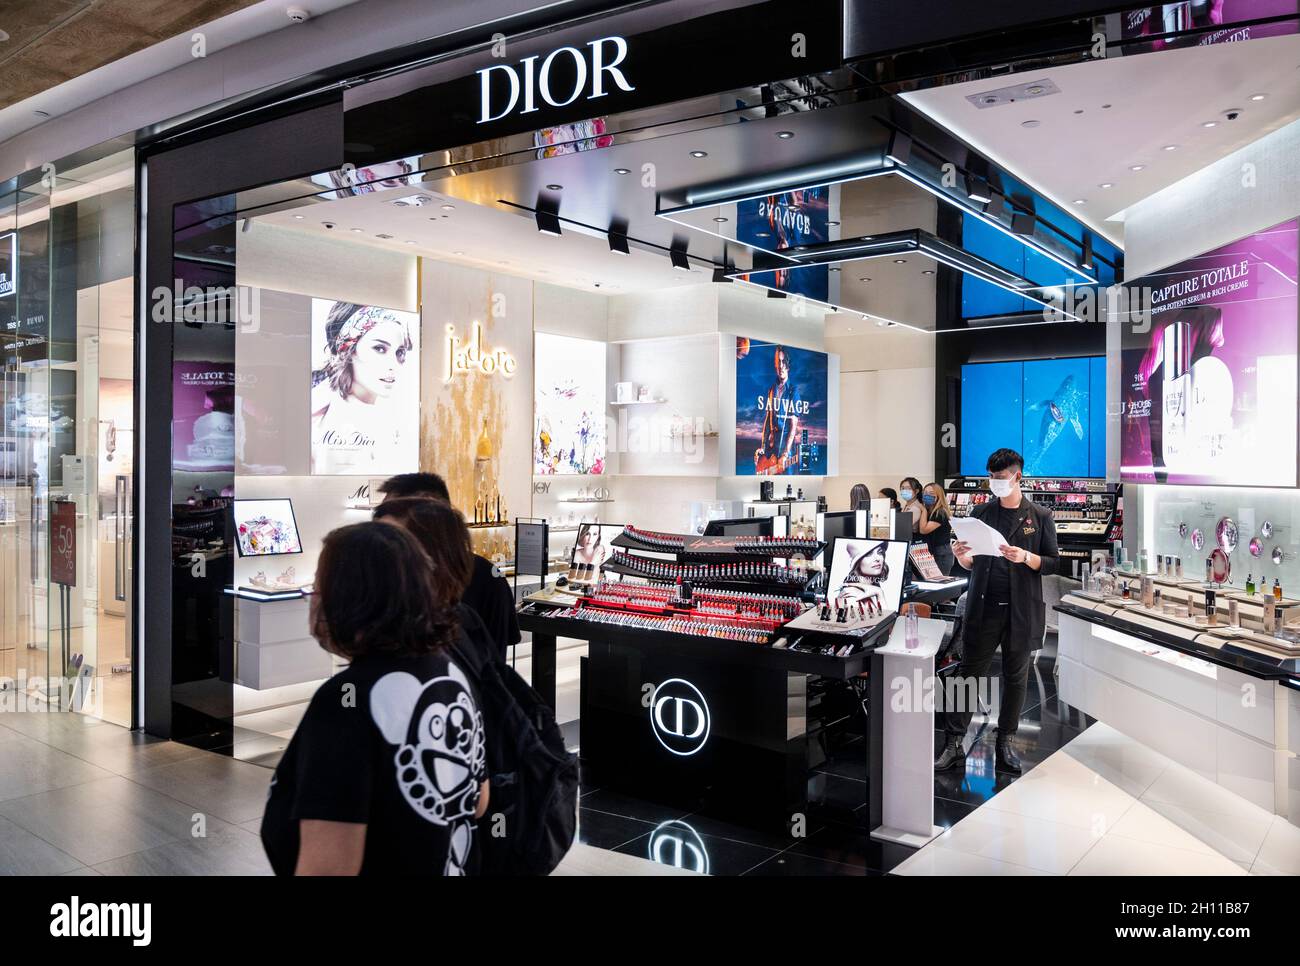 Christian Dior Dior Addict Stellar Shine Lipstick 863